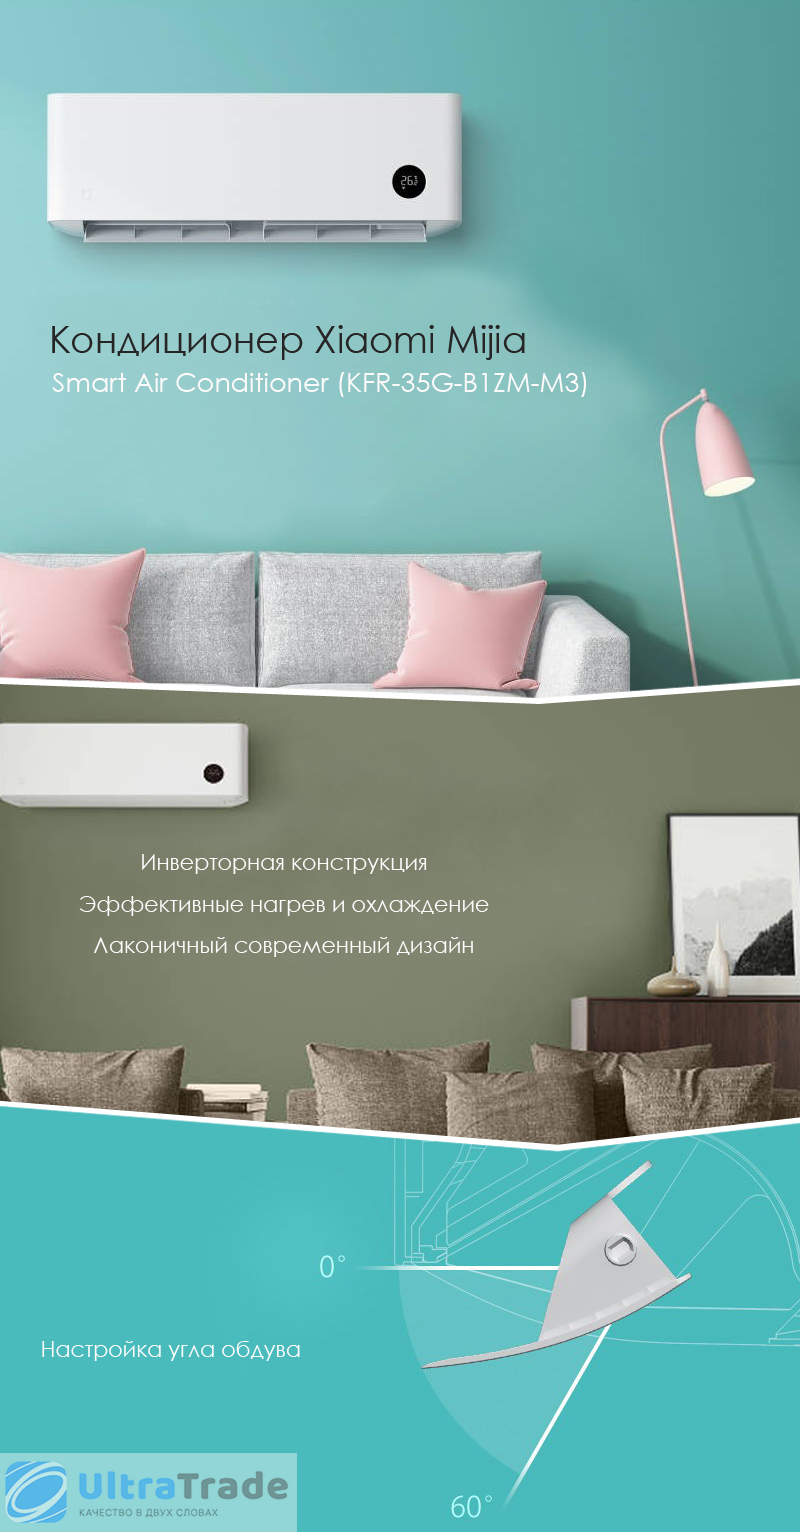 Кондиционер Xiaomi Mijia Smart Air Conditioner (KFR-35GW-B1ZM-M3)